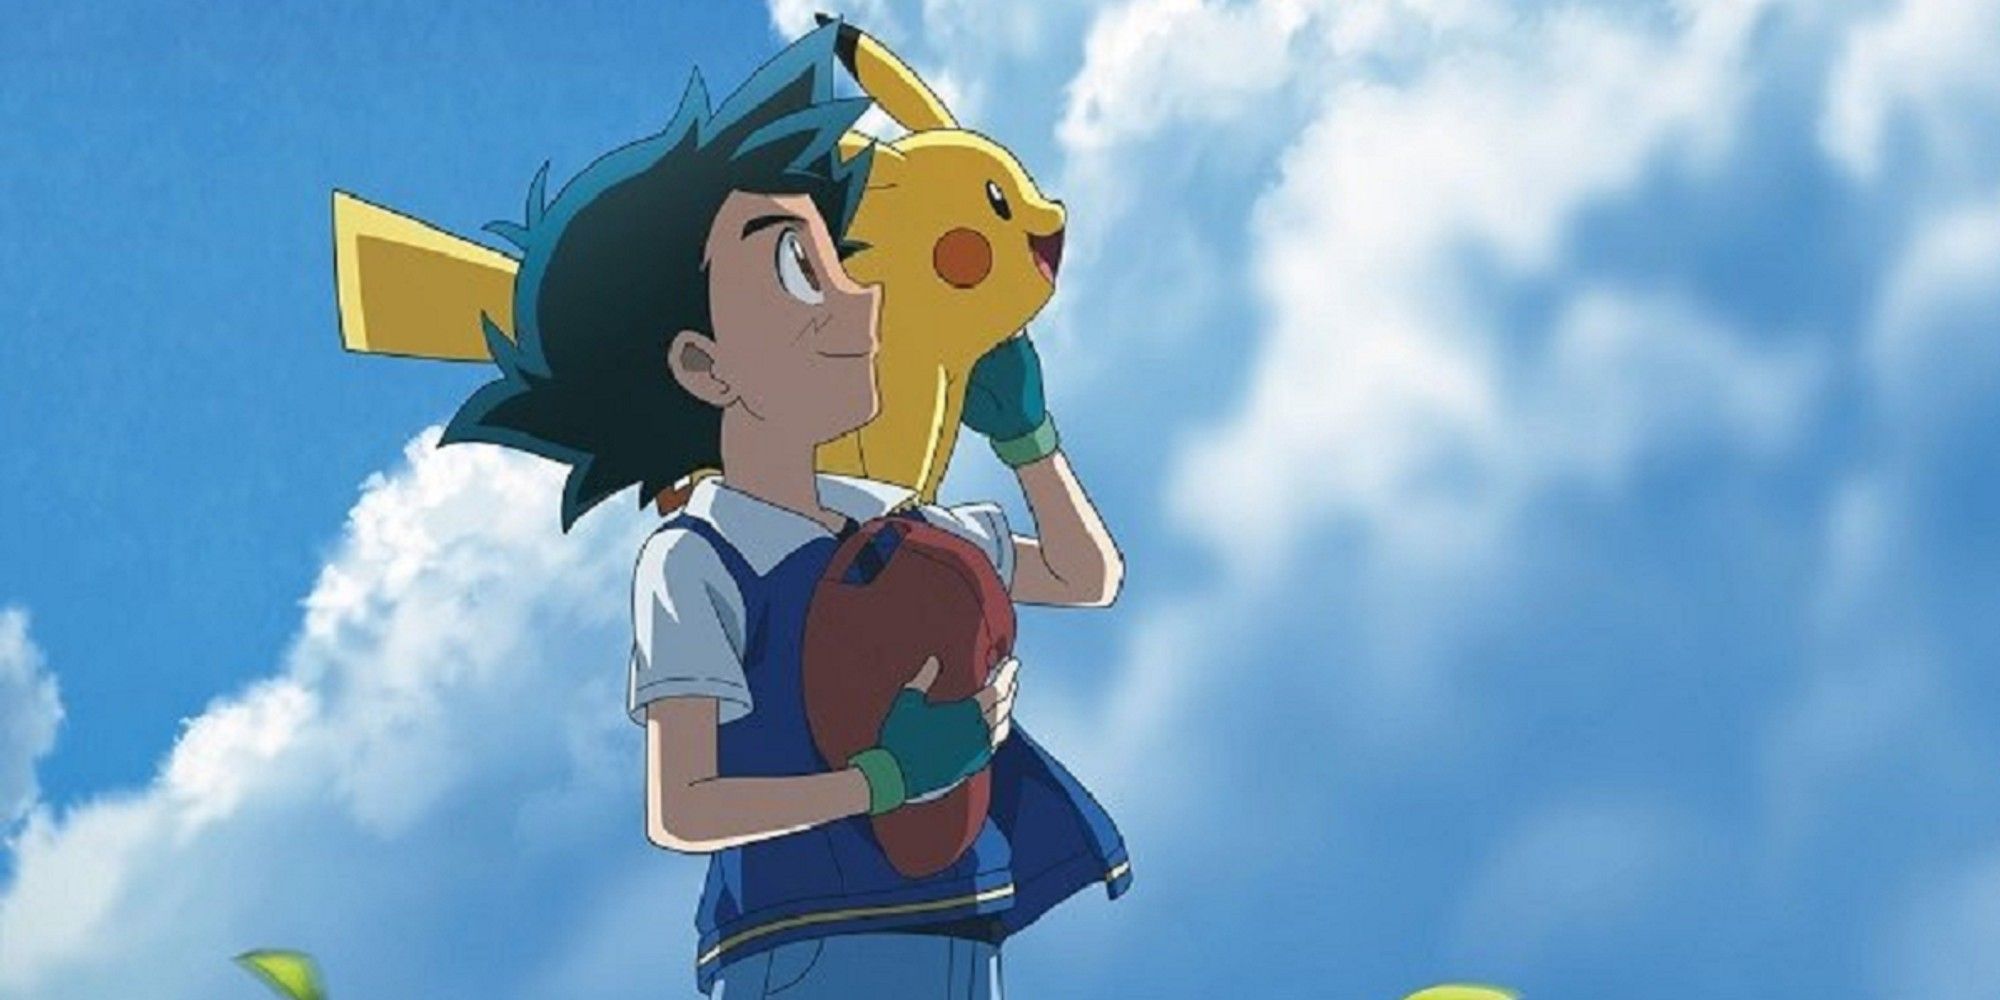 Pokémon's Post-Ash Ketchum Anime Gets First Full Trailer - IGN